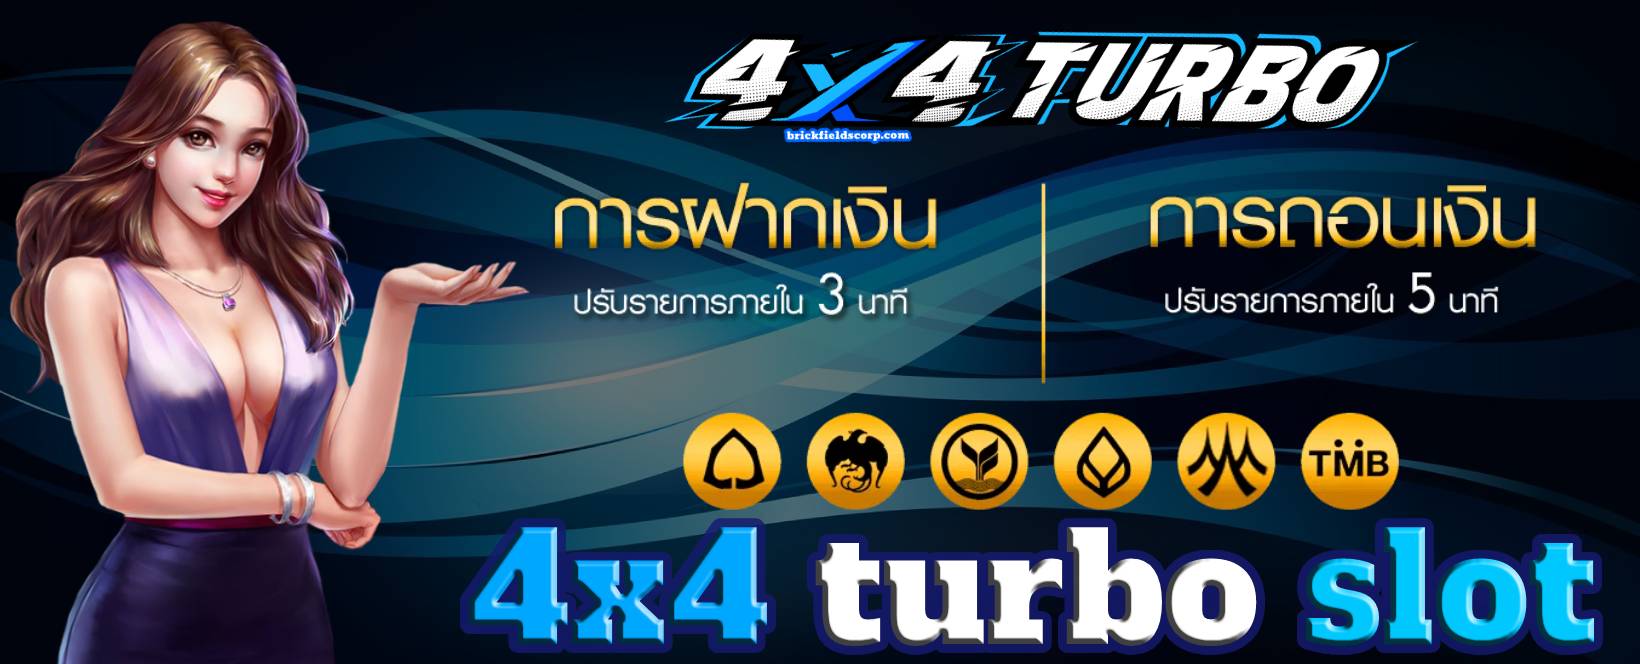 4x4 turbo slot